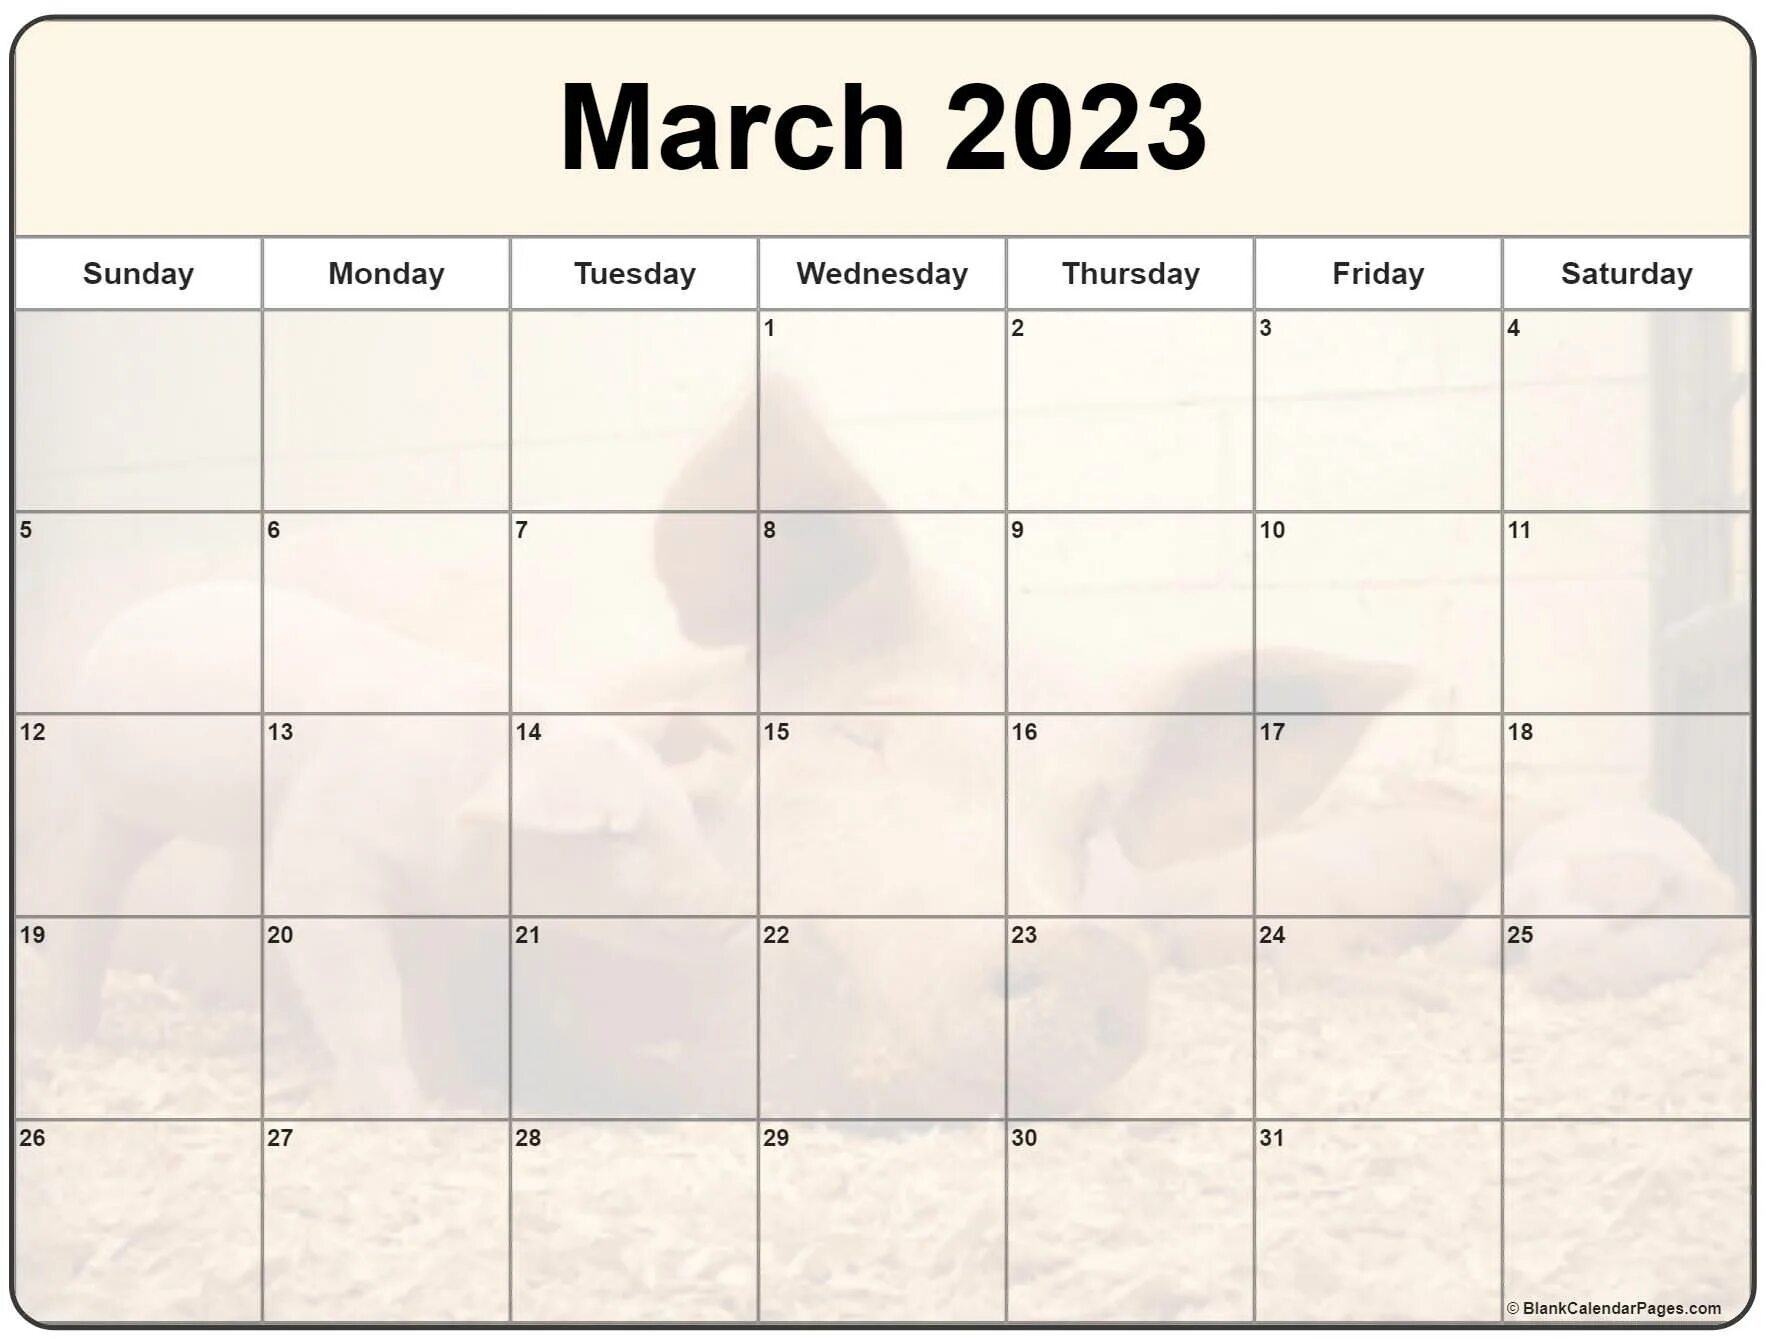 Январь март 2023 г. Календарь планер на декабрь 2022 год. Календарь планер на февраль. Планер на месяц февраль. Календарь декабрь 2022.